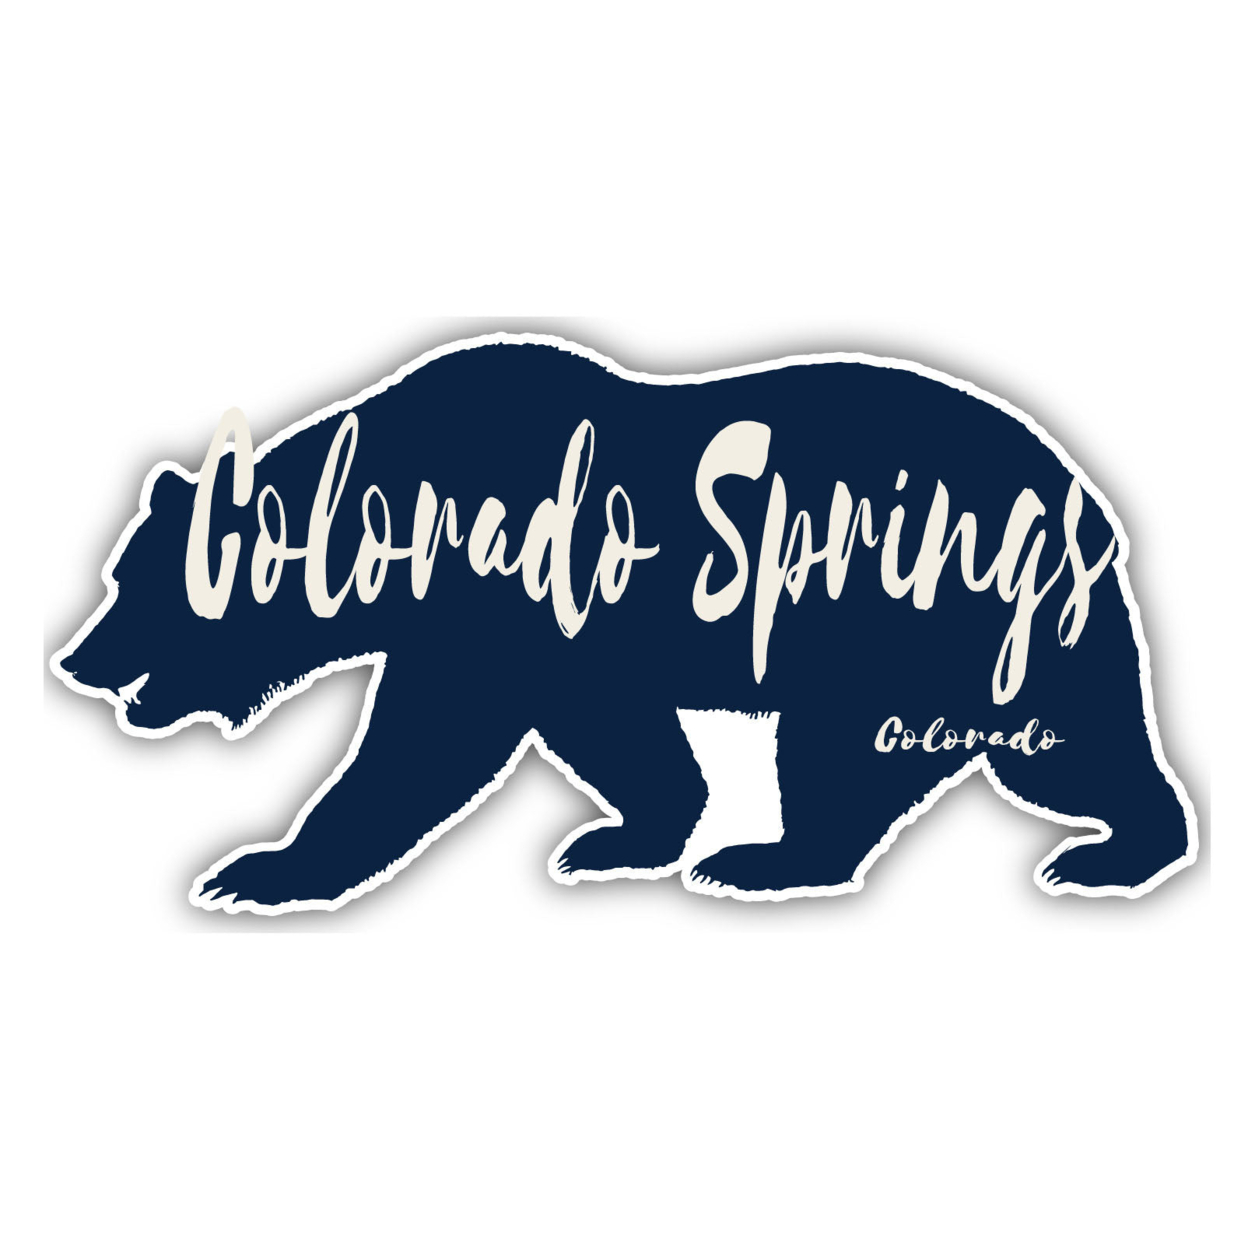 Colorado Springs Colorado Souvenir Decorative Stickers (Choose Theme And Size) - Single Unit, 6-Inch, Adventures Awaits